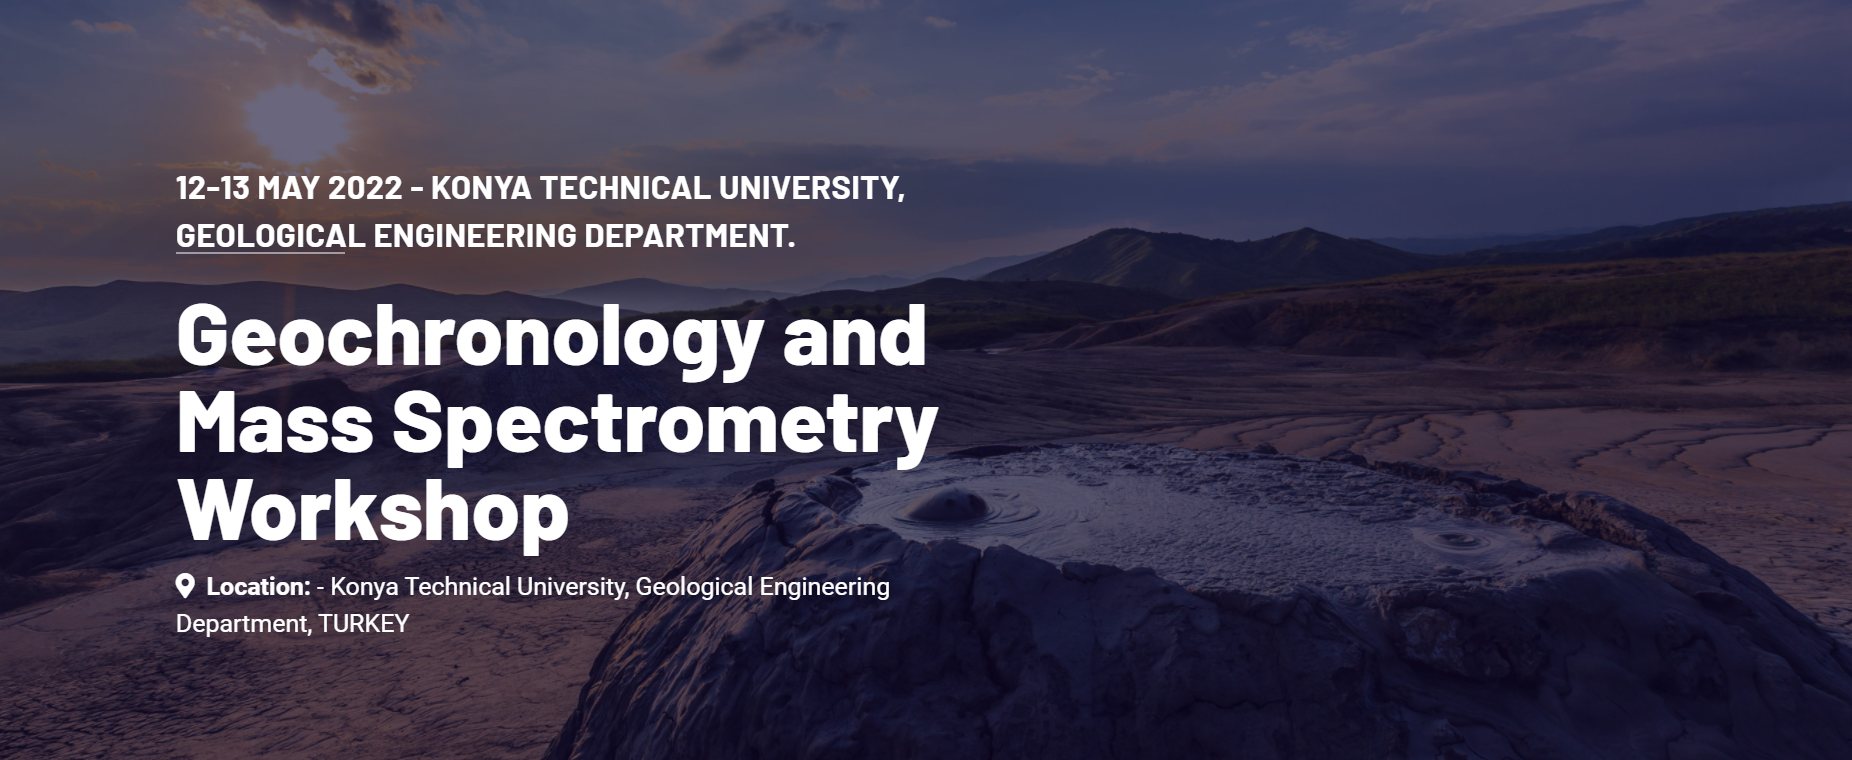 Geochronology and Mass Spectrometry Workshop 2022